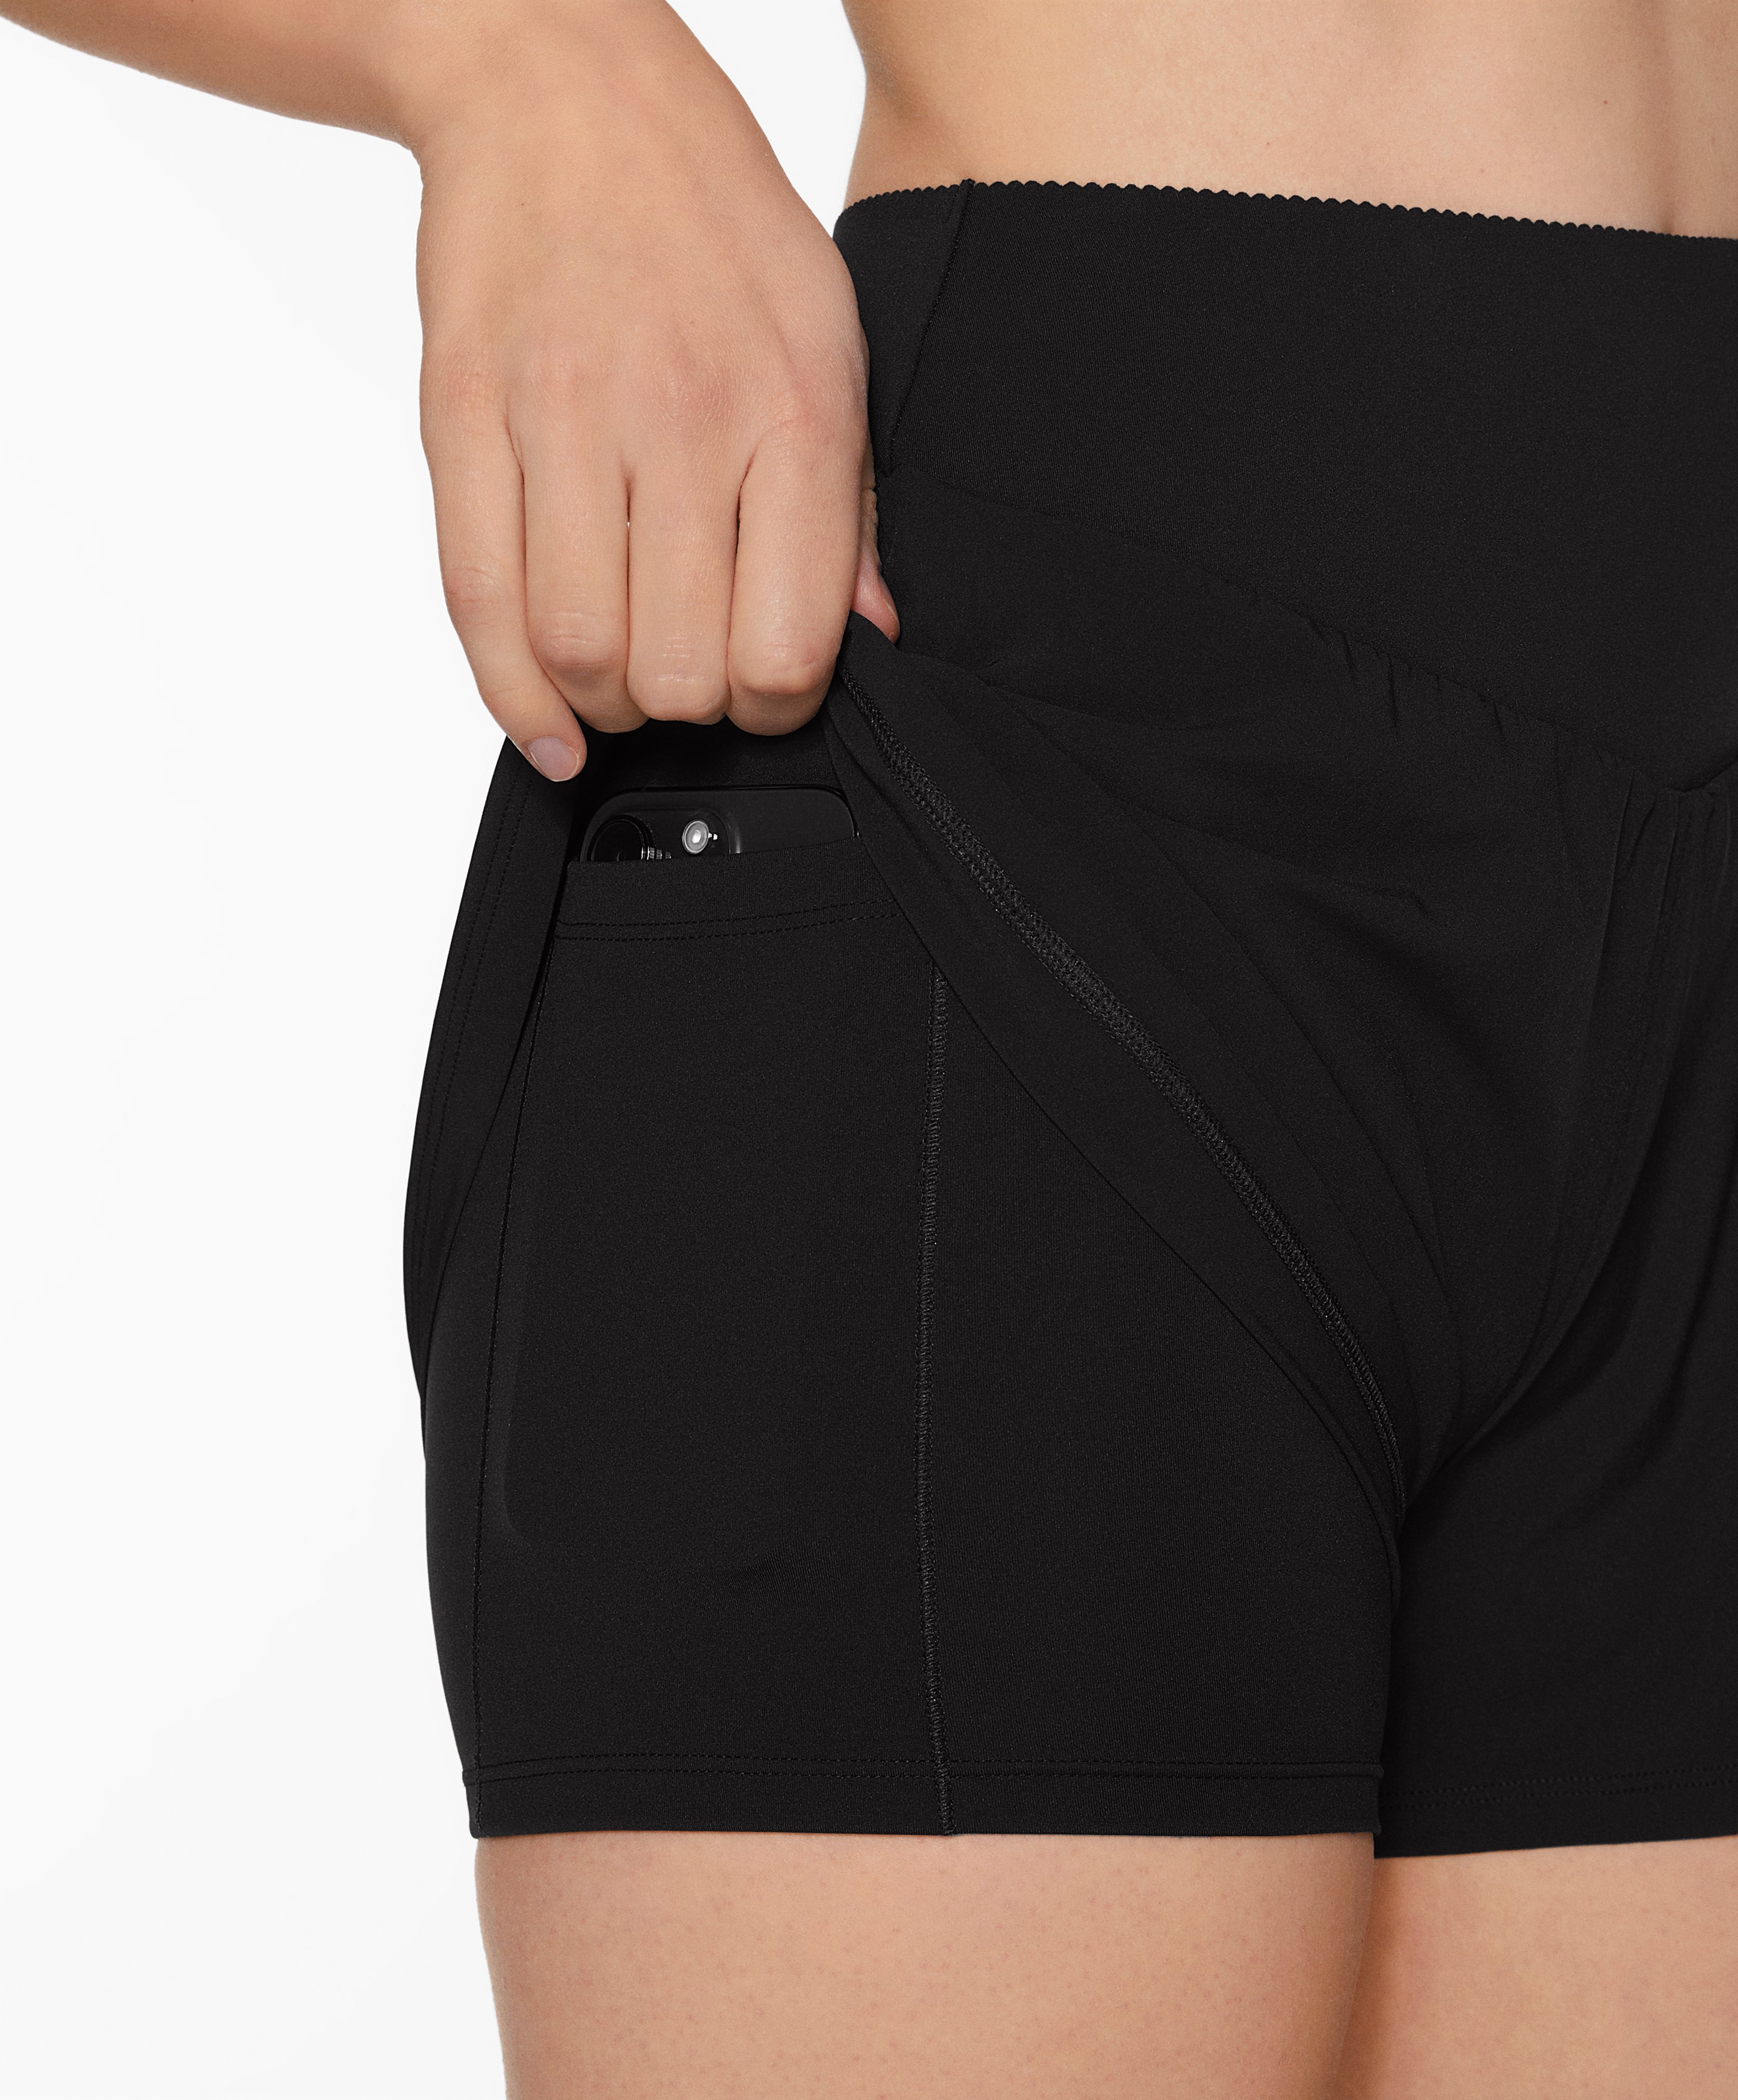 Shorts compressive pocket 10 cm